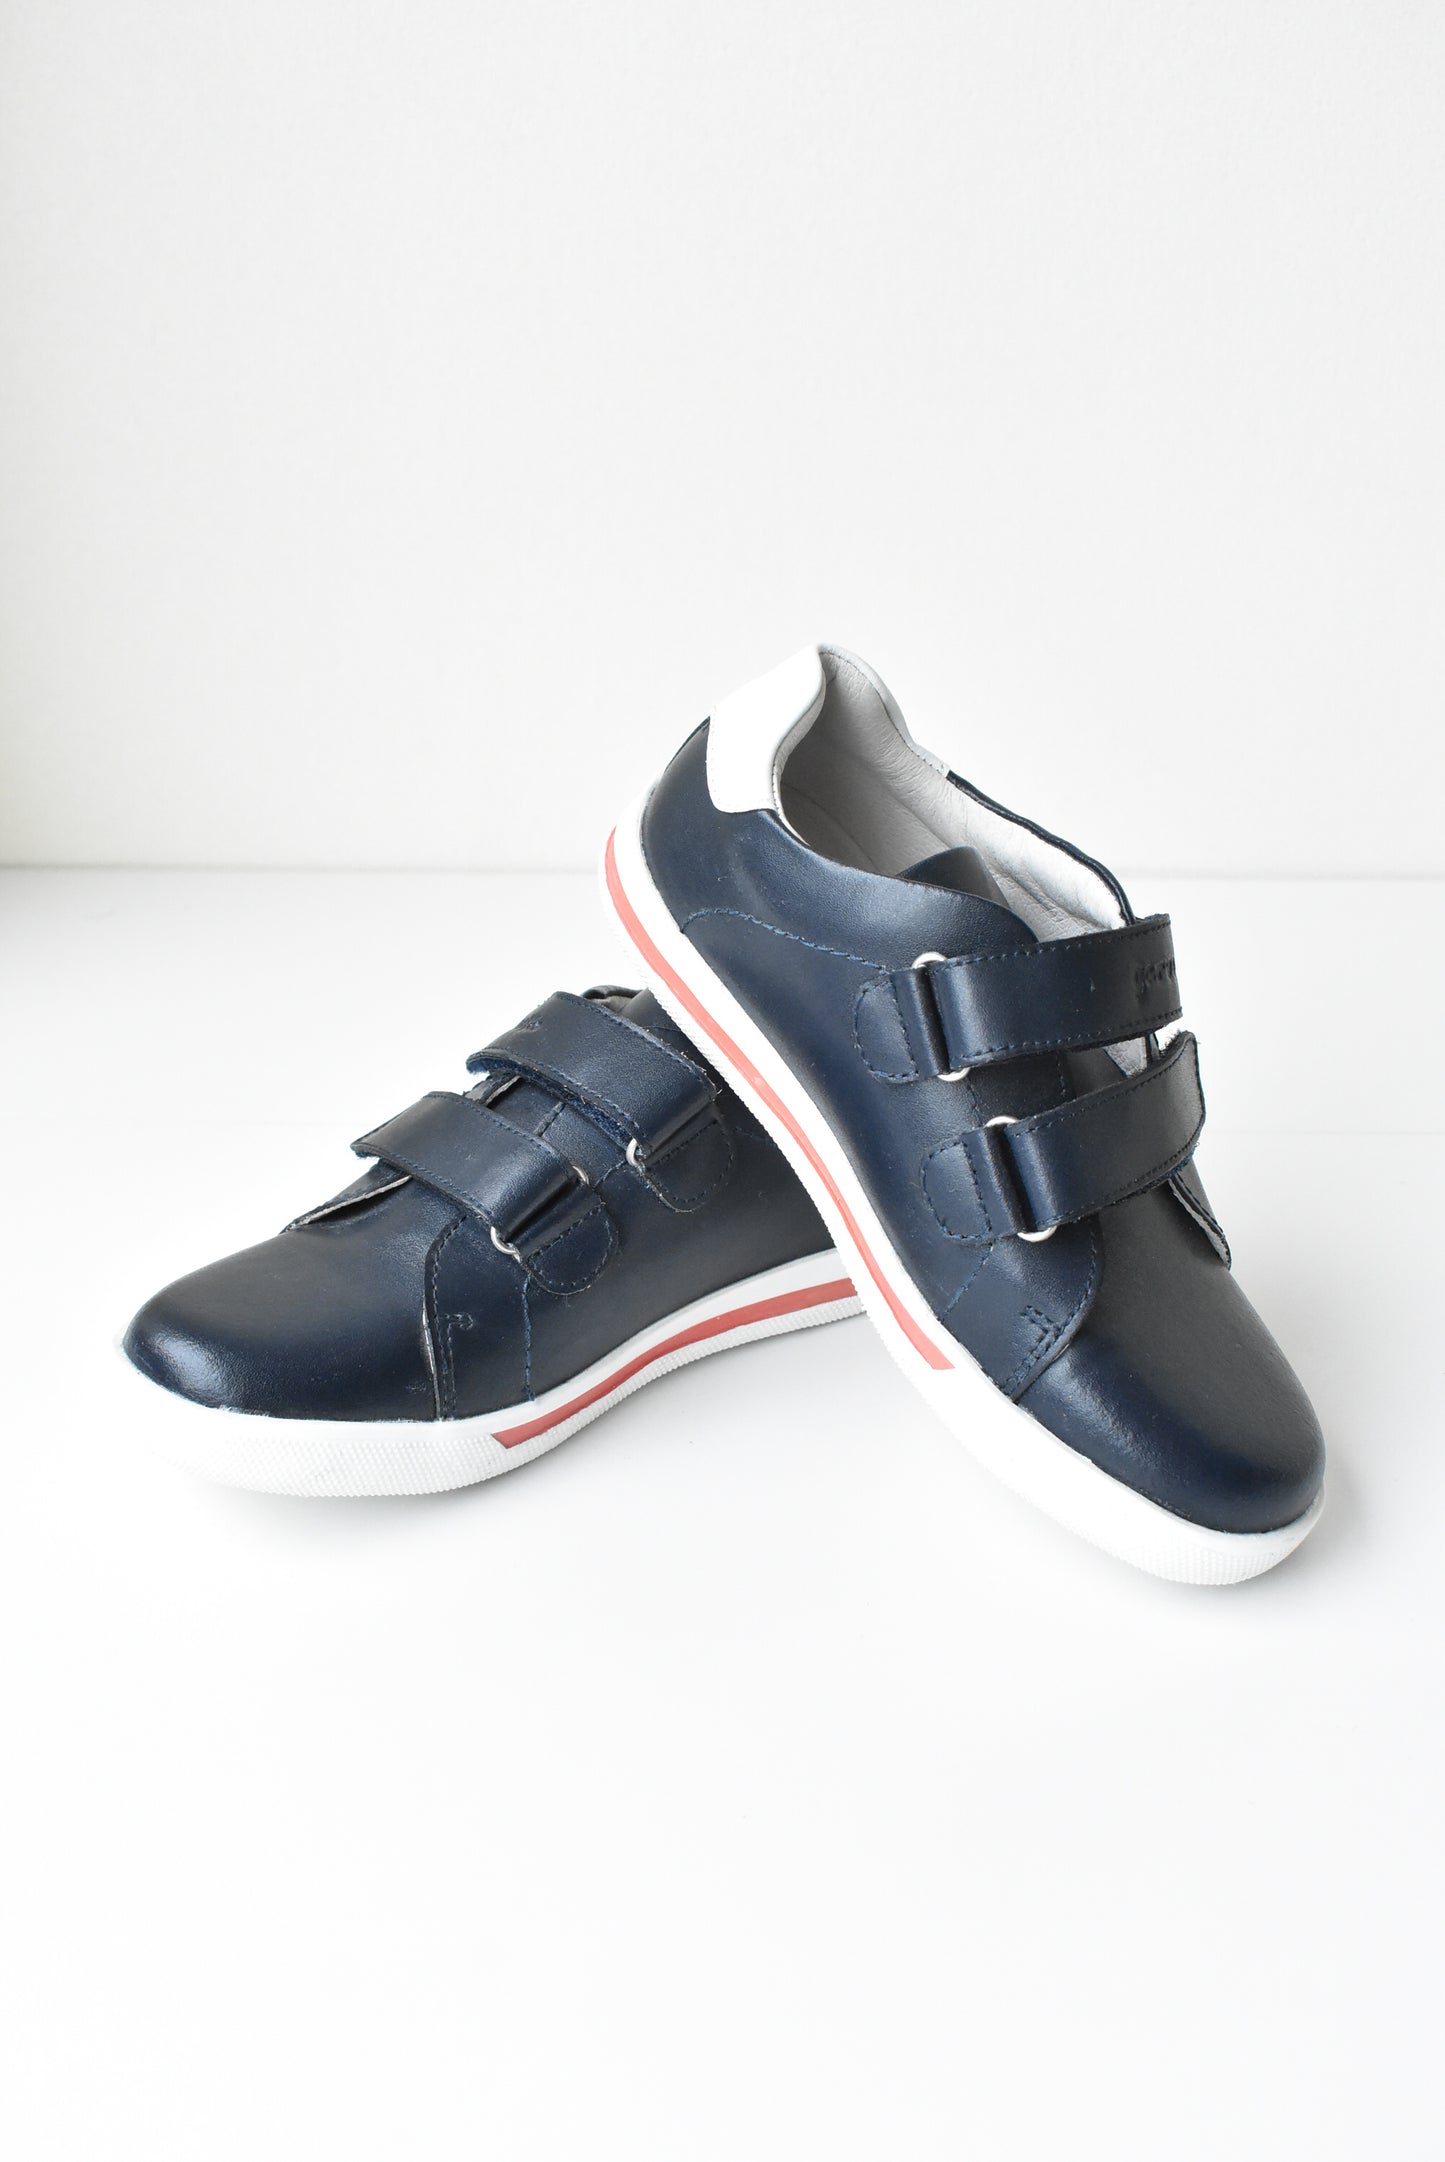 Garvalin navy leather velcro kids sneakers NEW, size 9